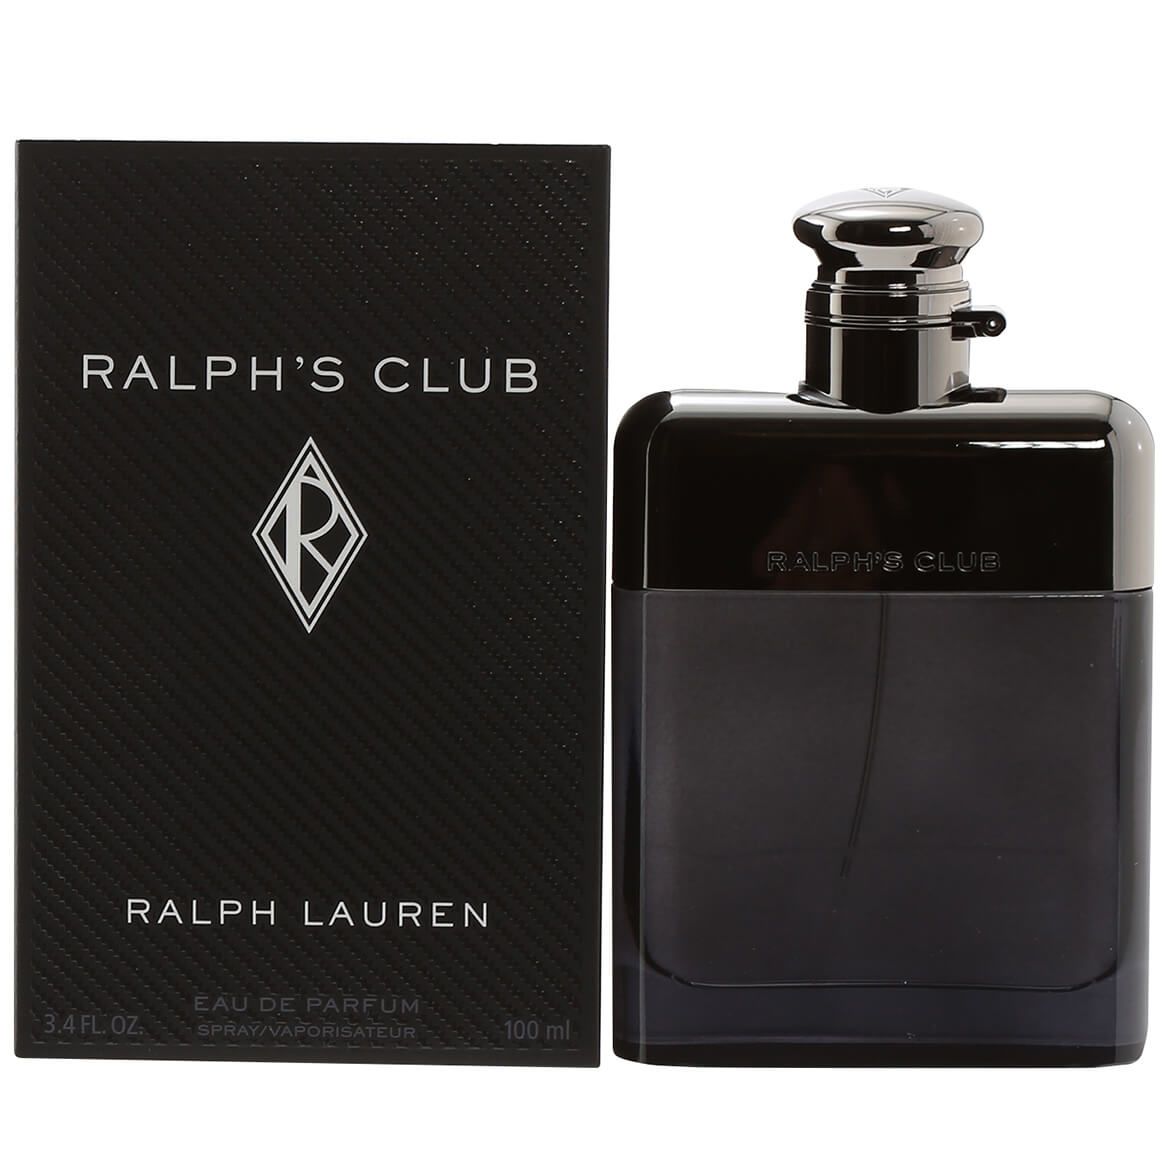 Ralph's Club by Ralph Lauren for Men EDP, 3.4 fl. oz. + '-' + 377289